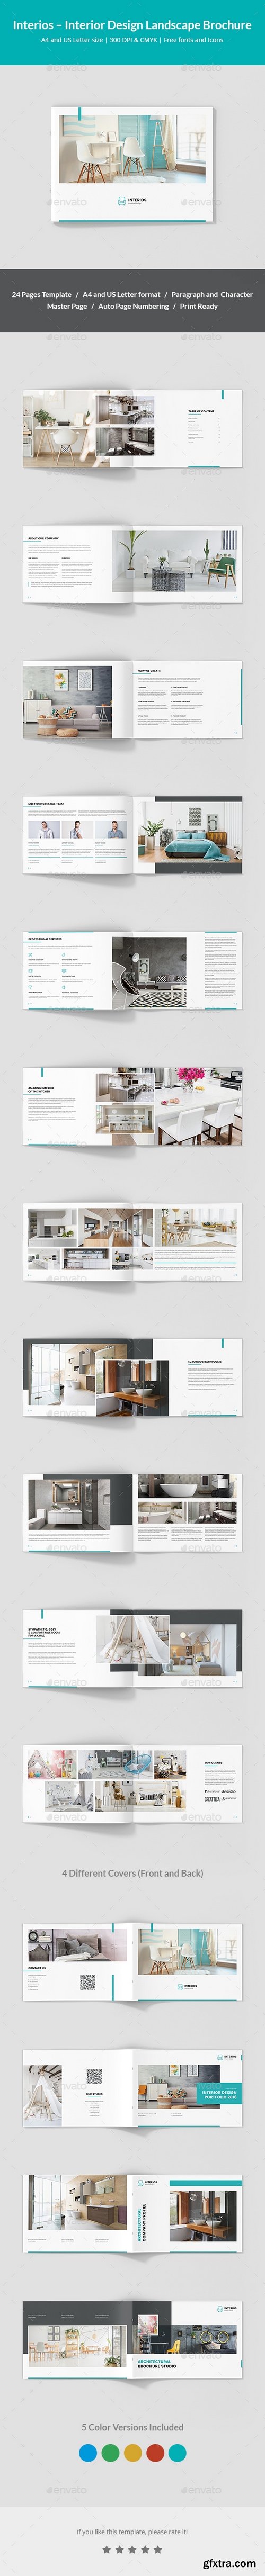 Graphicriver - Interios – Interior Design Landscape Brochure 21542155